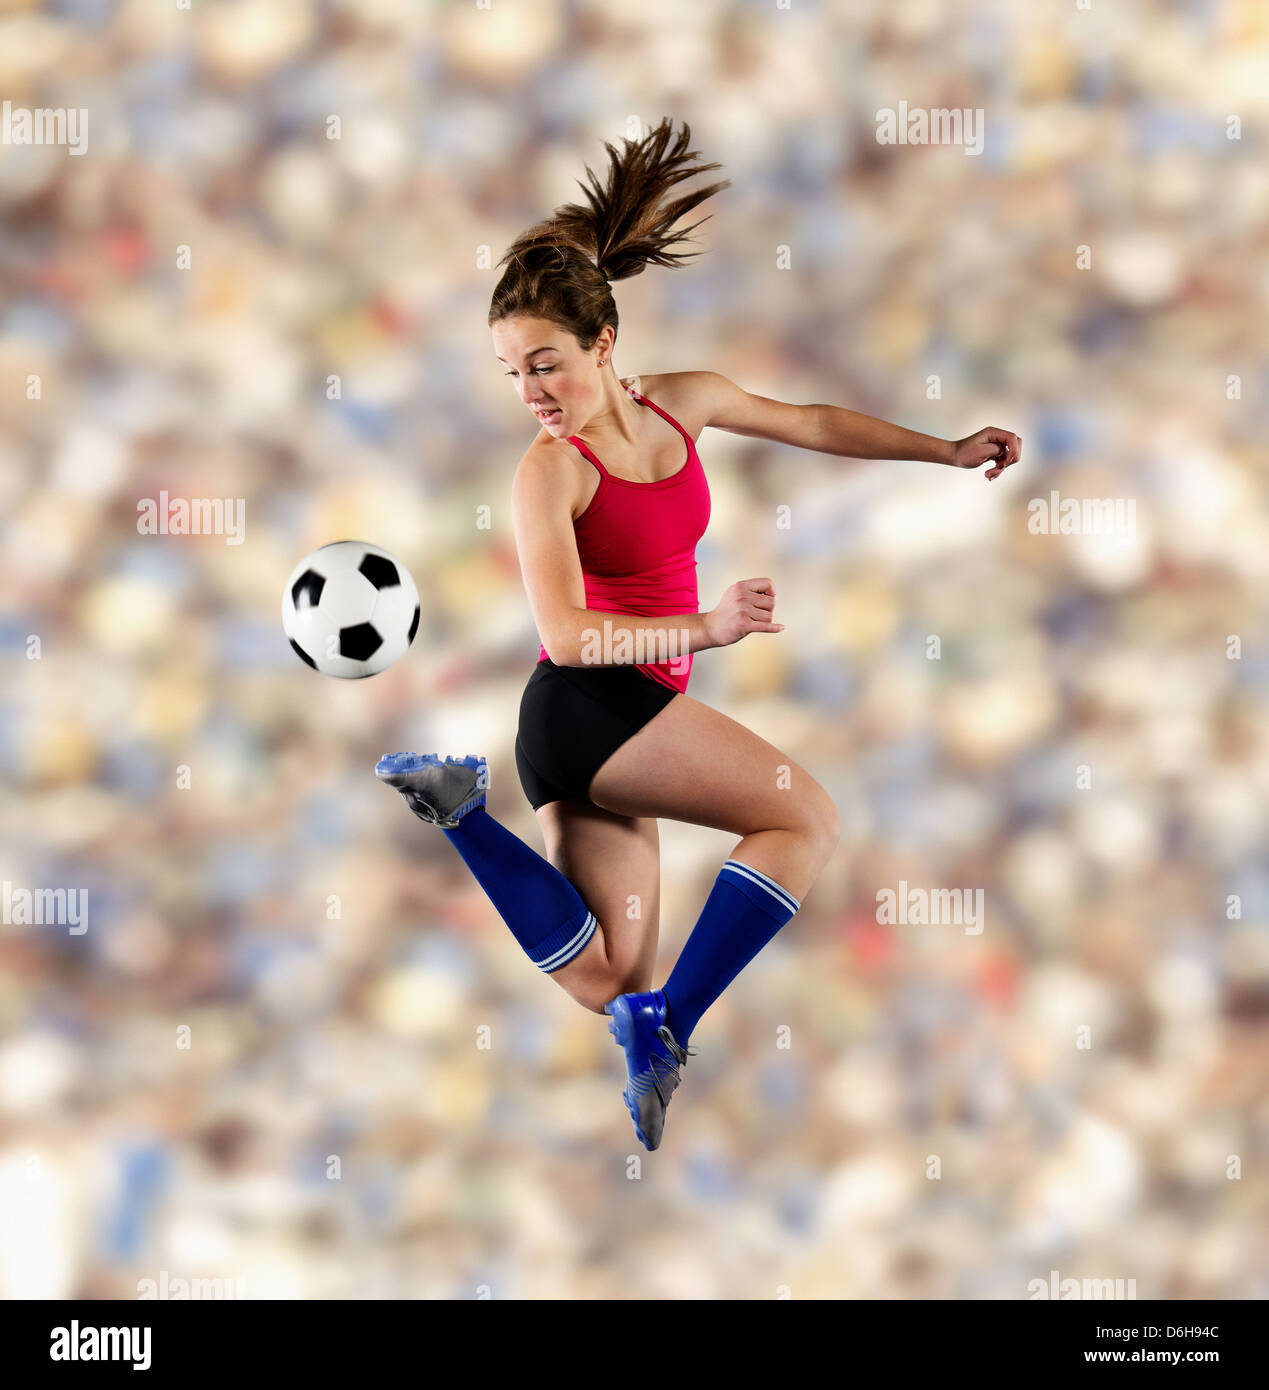 Soccer player kicking ball dans l'air Banque D'Images